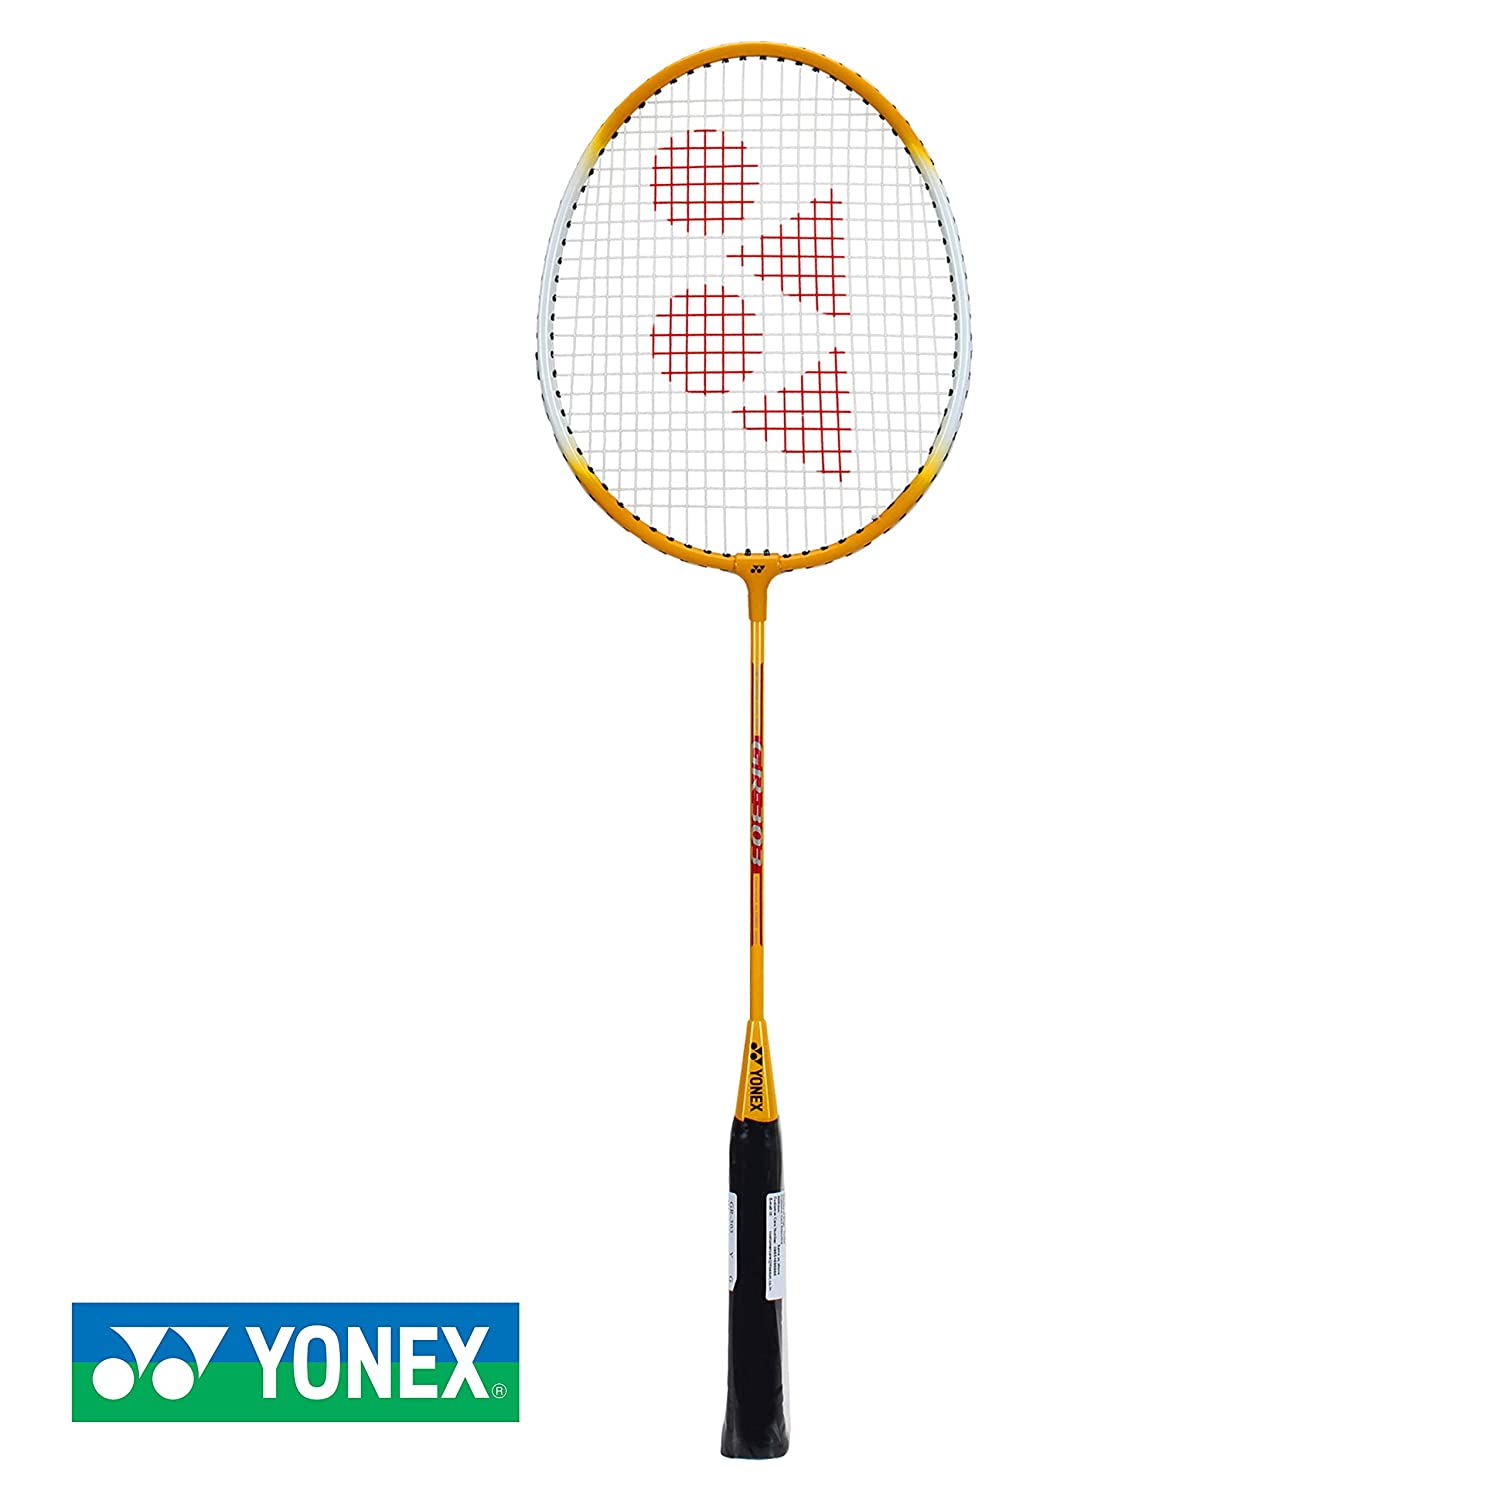 Yonex Badminton Racket GR 303 Online Sports Shop in Dehradun